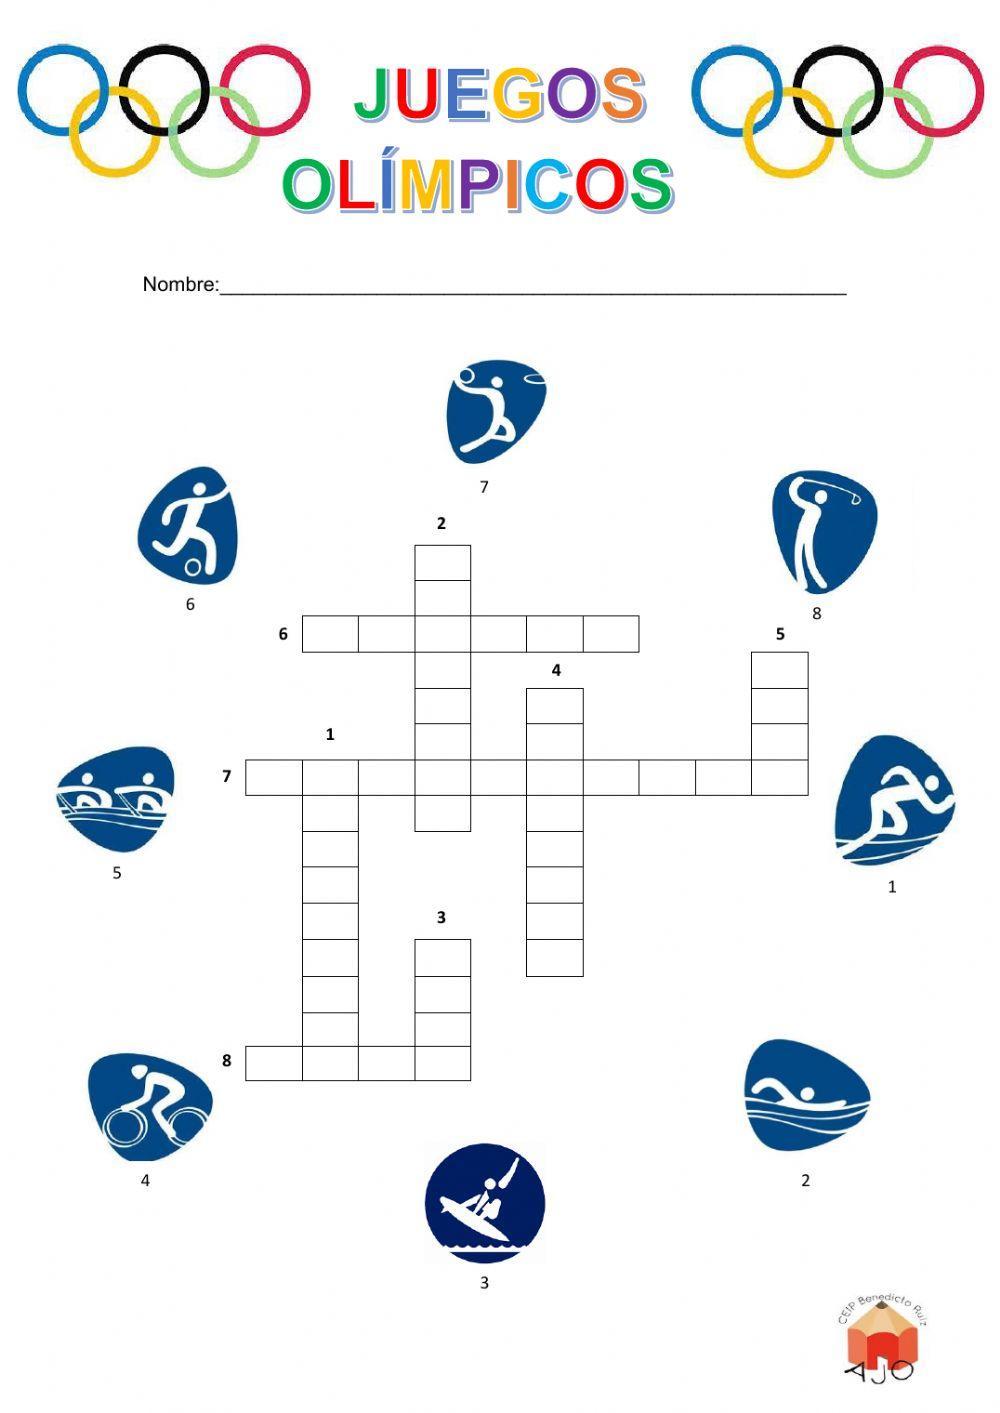 Crucigrama olímpico.